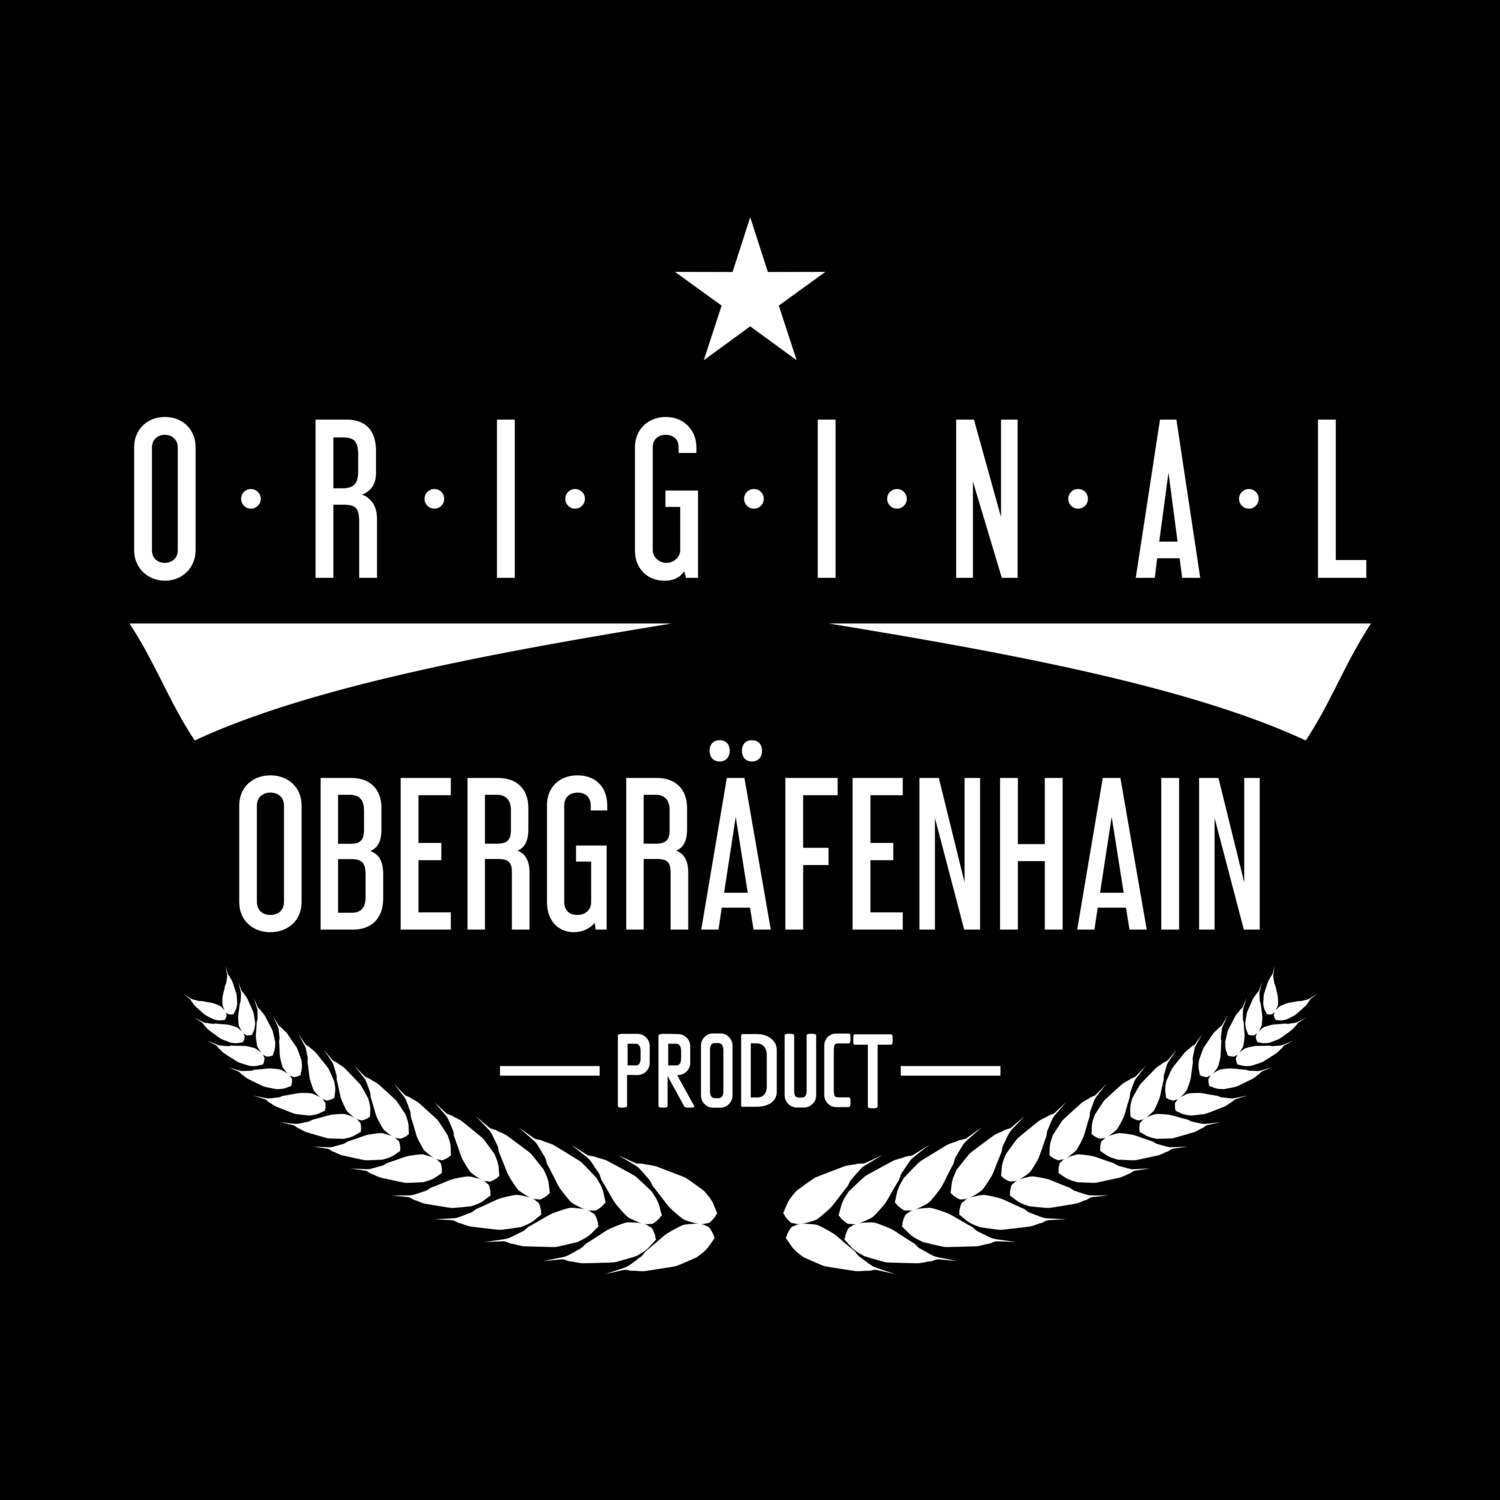 Obergräfenhain T-Shirt »Original Product«